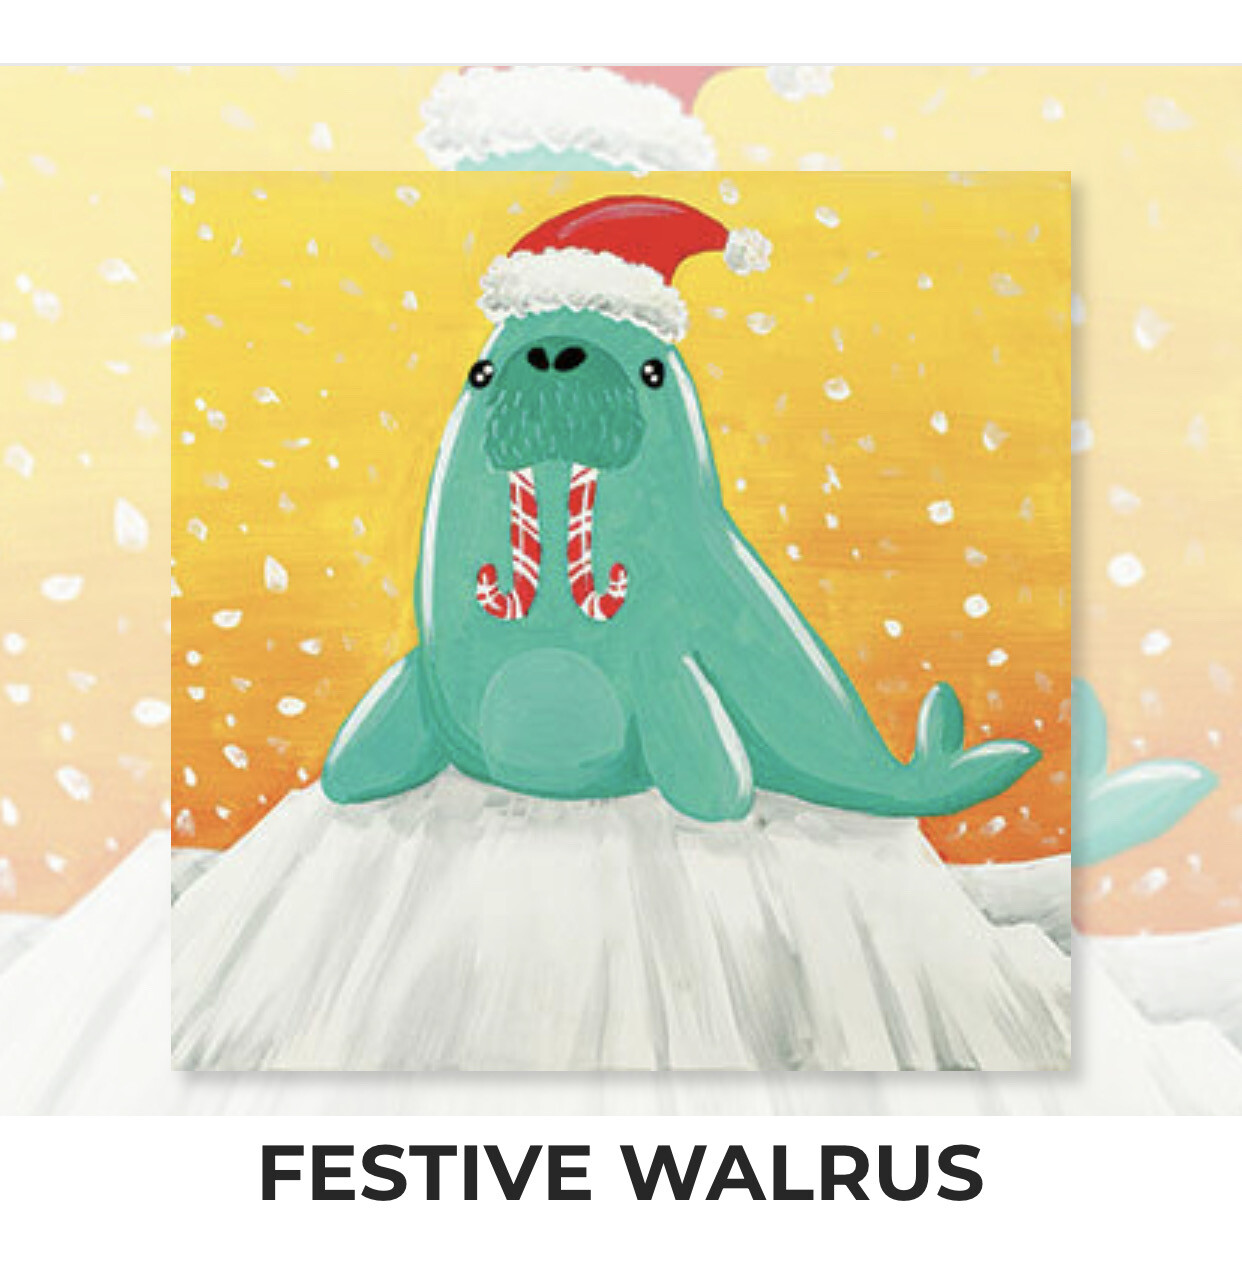 Festive Walrus - KIDS Acrylic Paint On Canvas DIY Art Kit - 3 Week Special Order